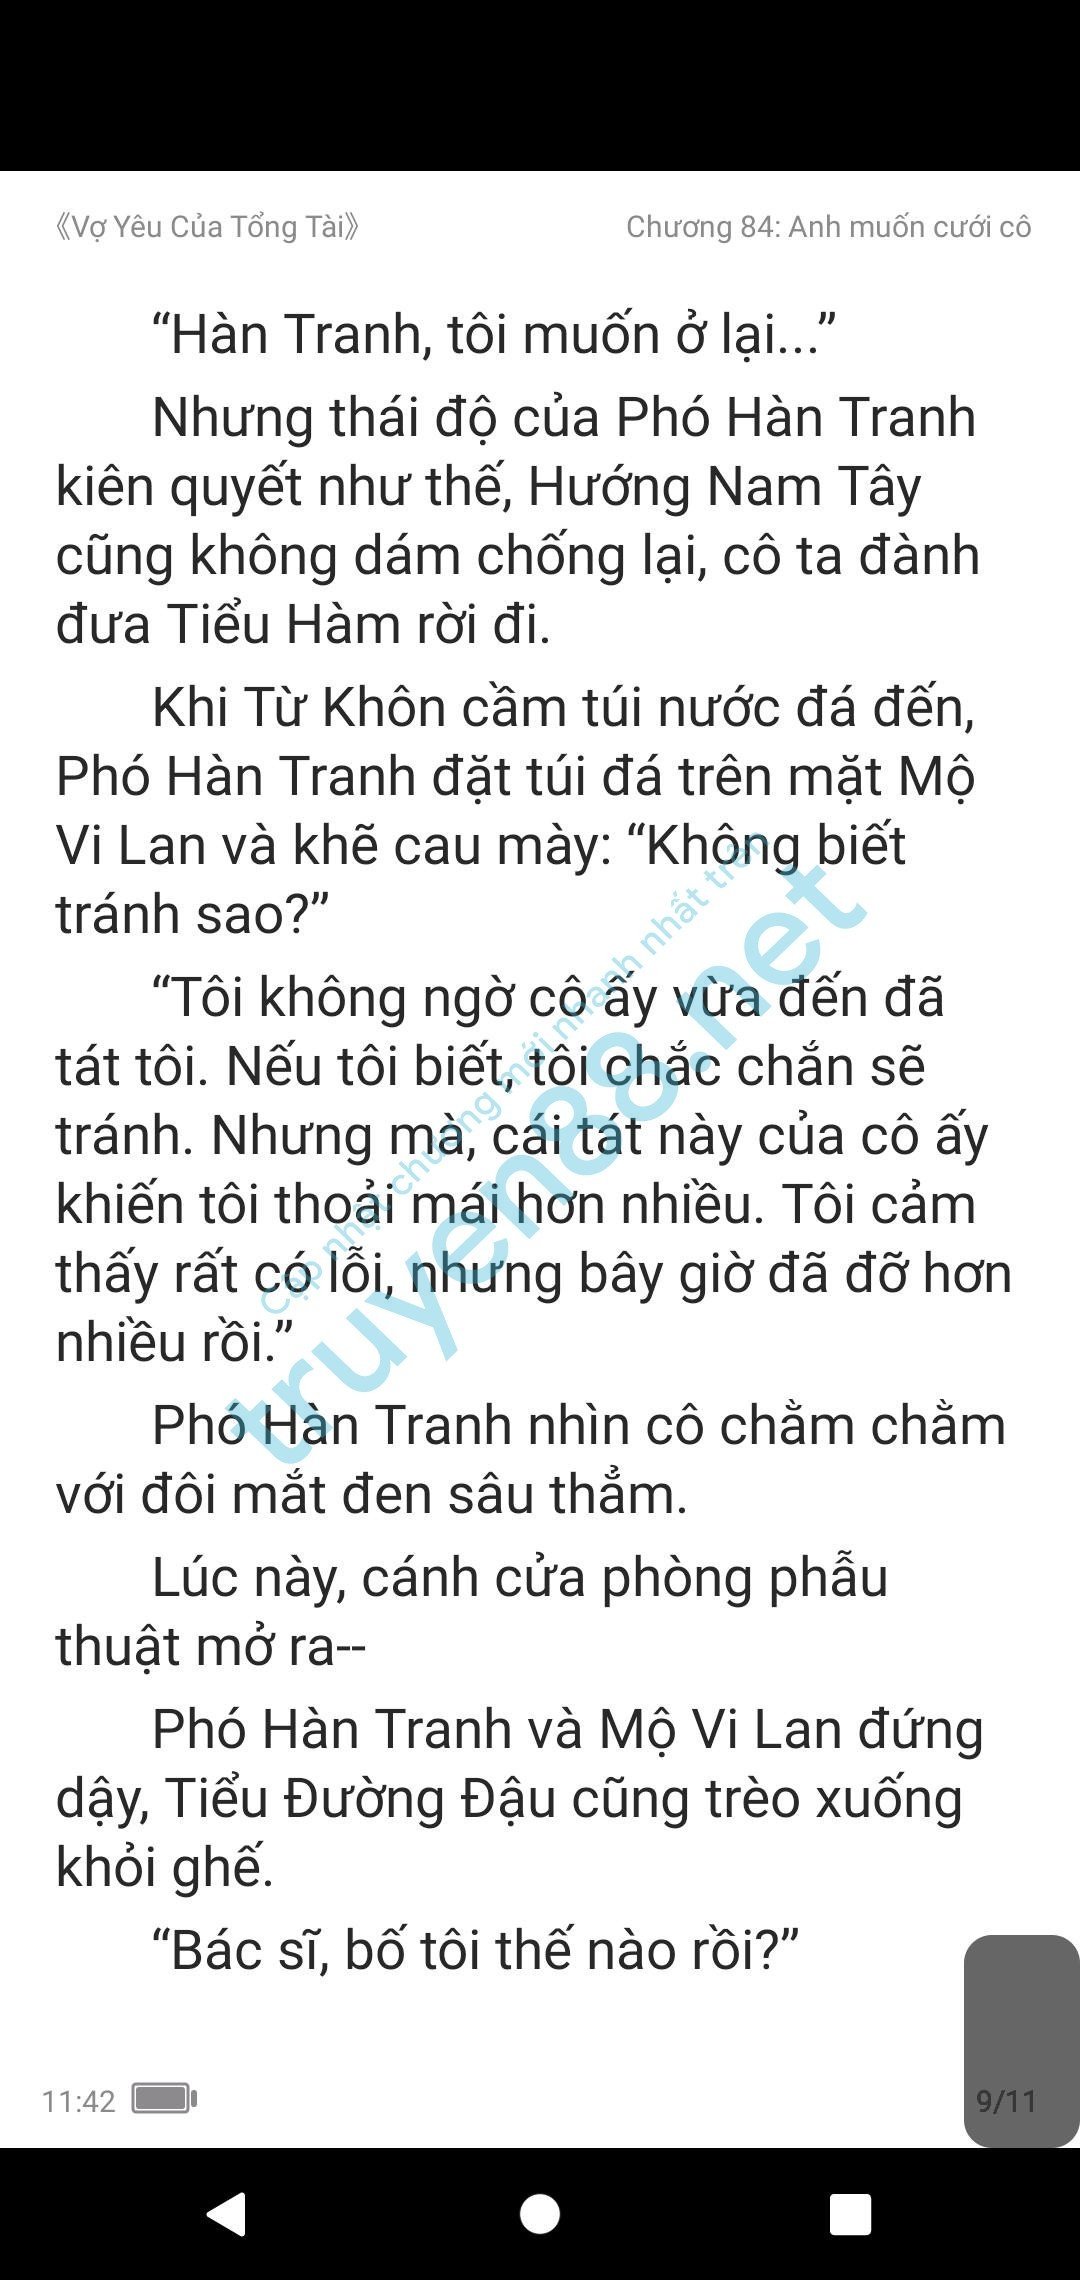 vo-yeu-cua-tong-tai-mo-vi-lan--pho-han-tranh-84-0